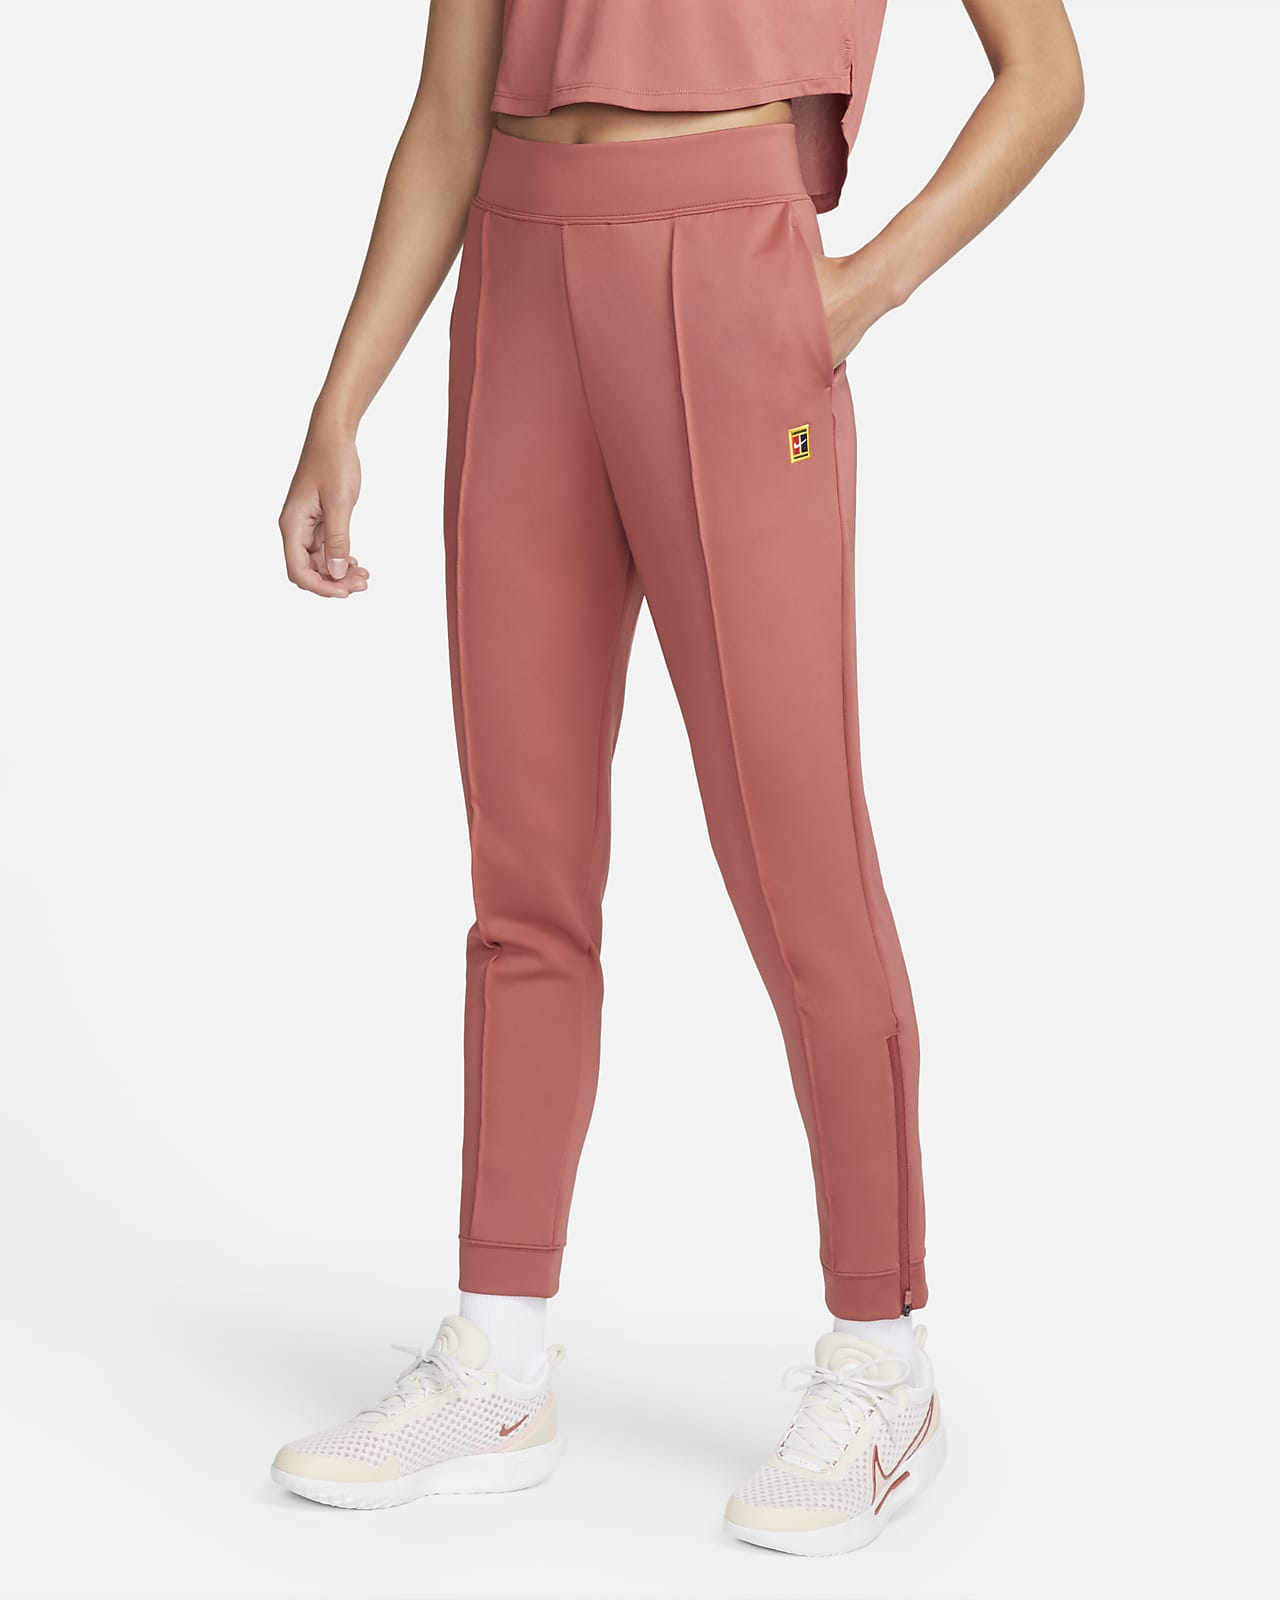 Pantalones tejidos de tenis para mujer Dri-FIT. Nike.com